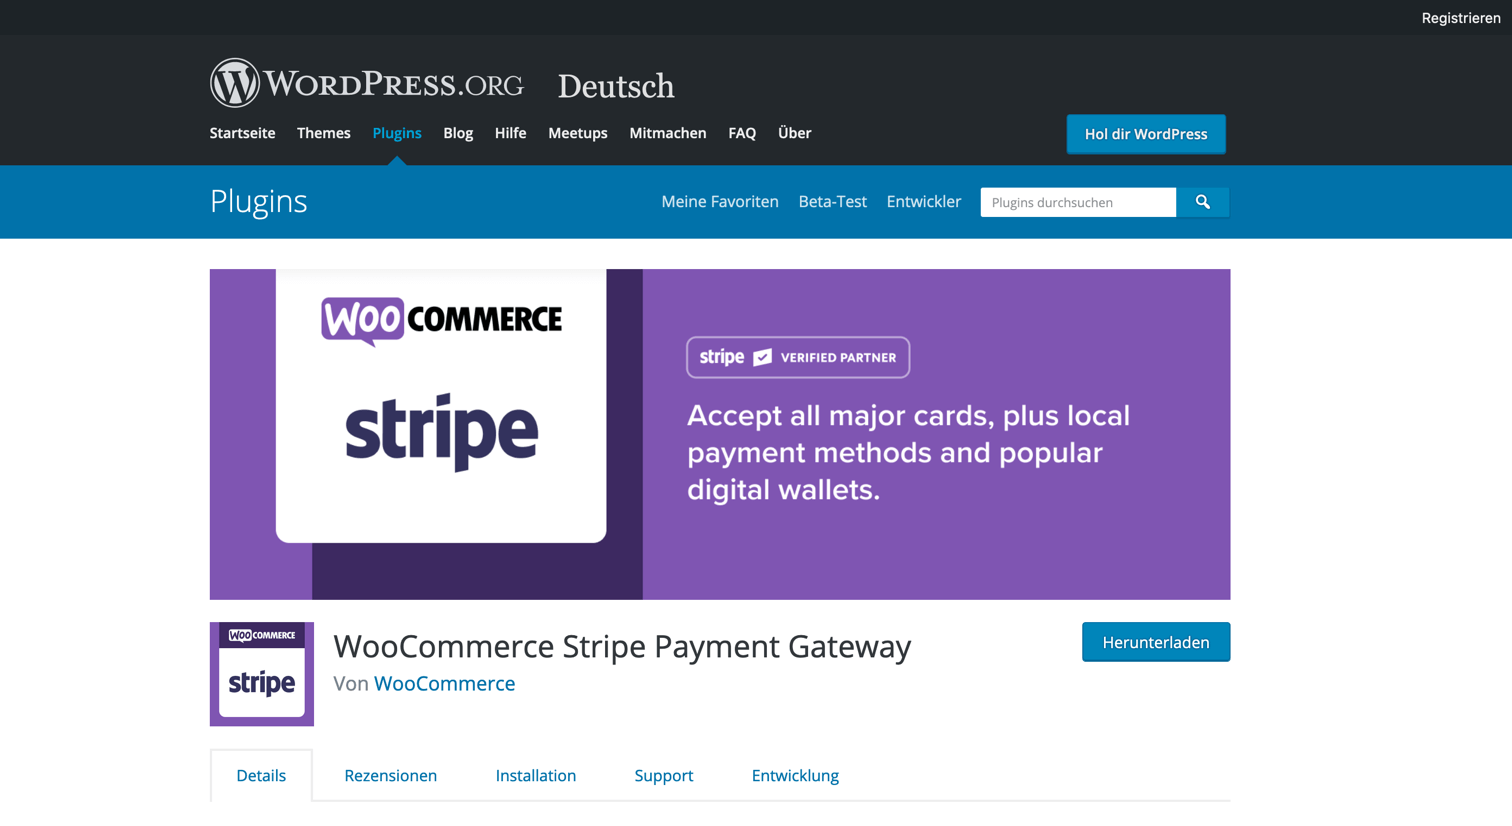 WooCommerce Stripe Gateway auf WordPress.org